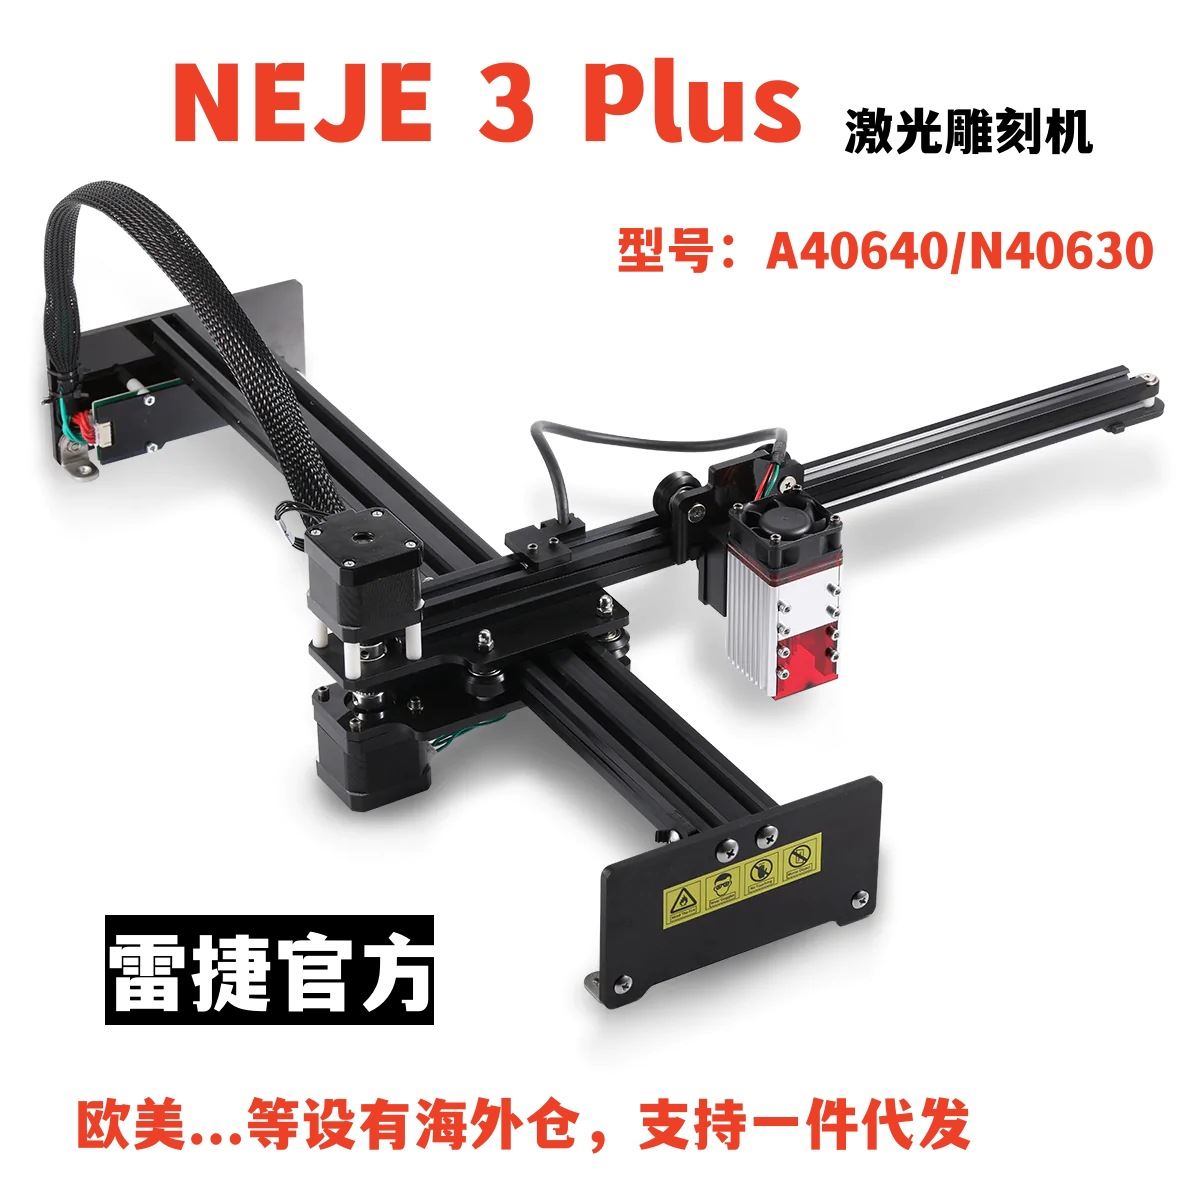 NEJE 3 Plus A40640/N40630 80W/40W 二极管激光雕刻机和切割机